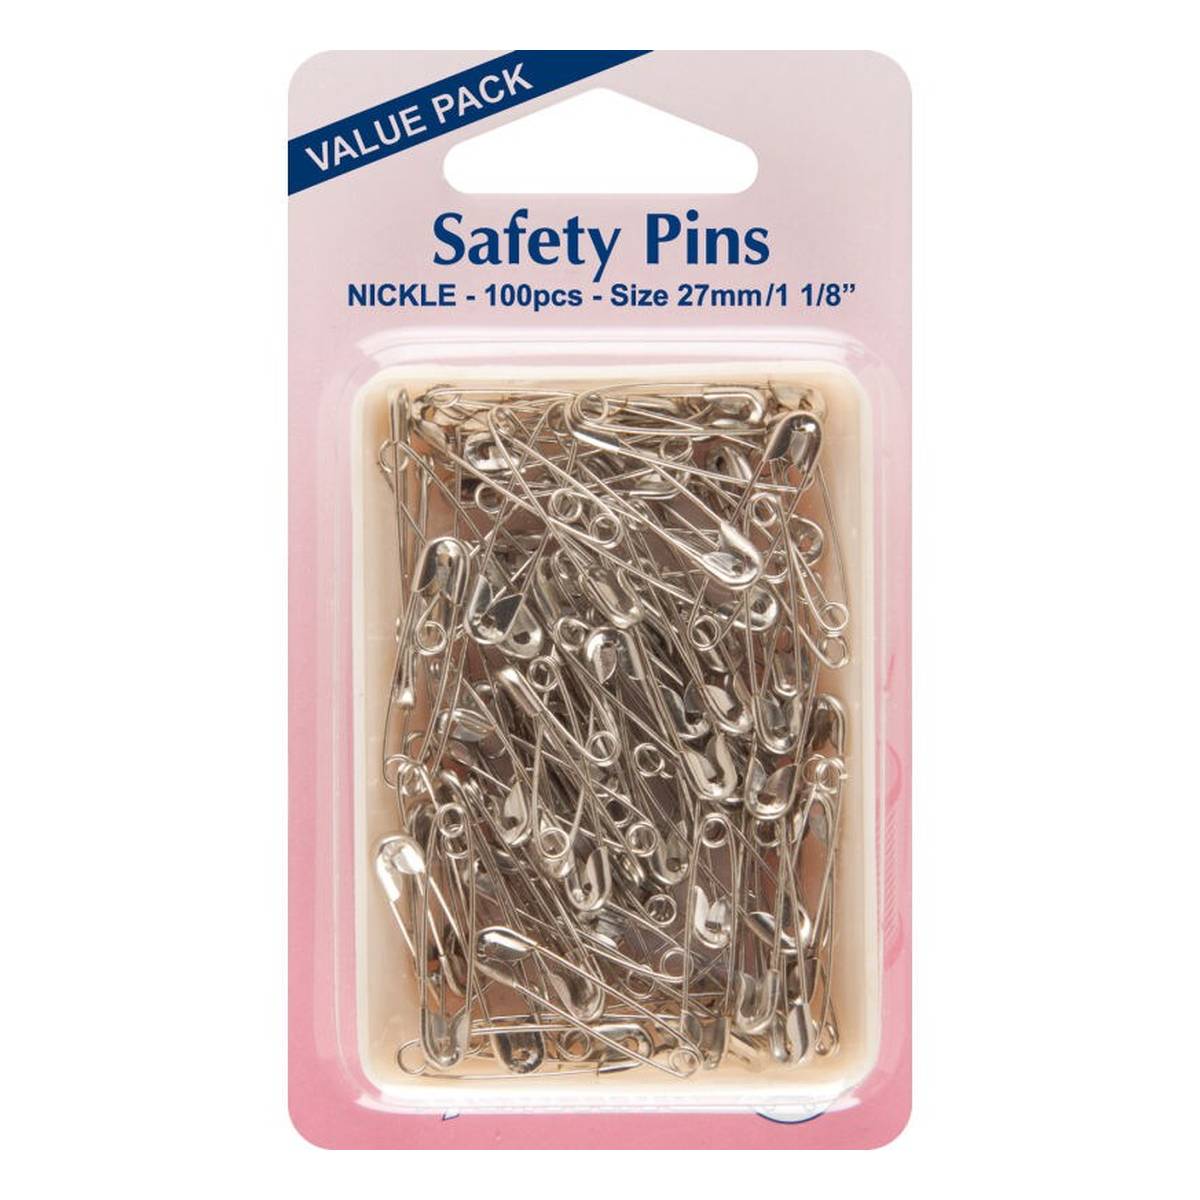 Hemline Gold Black Safety Pins 50 Pack